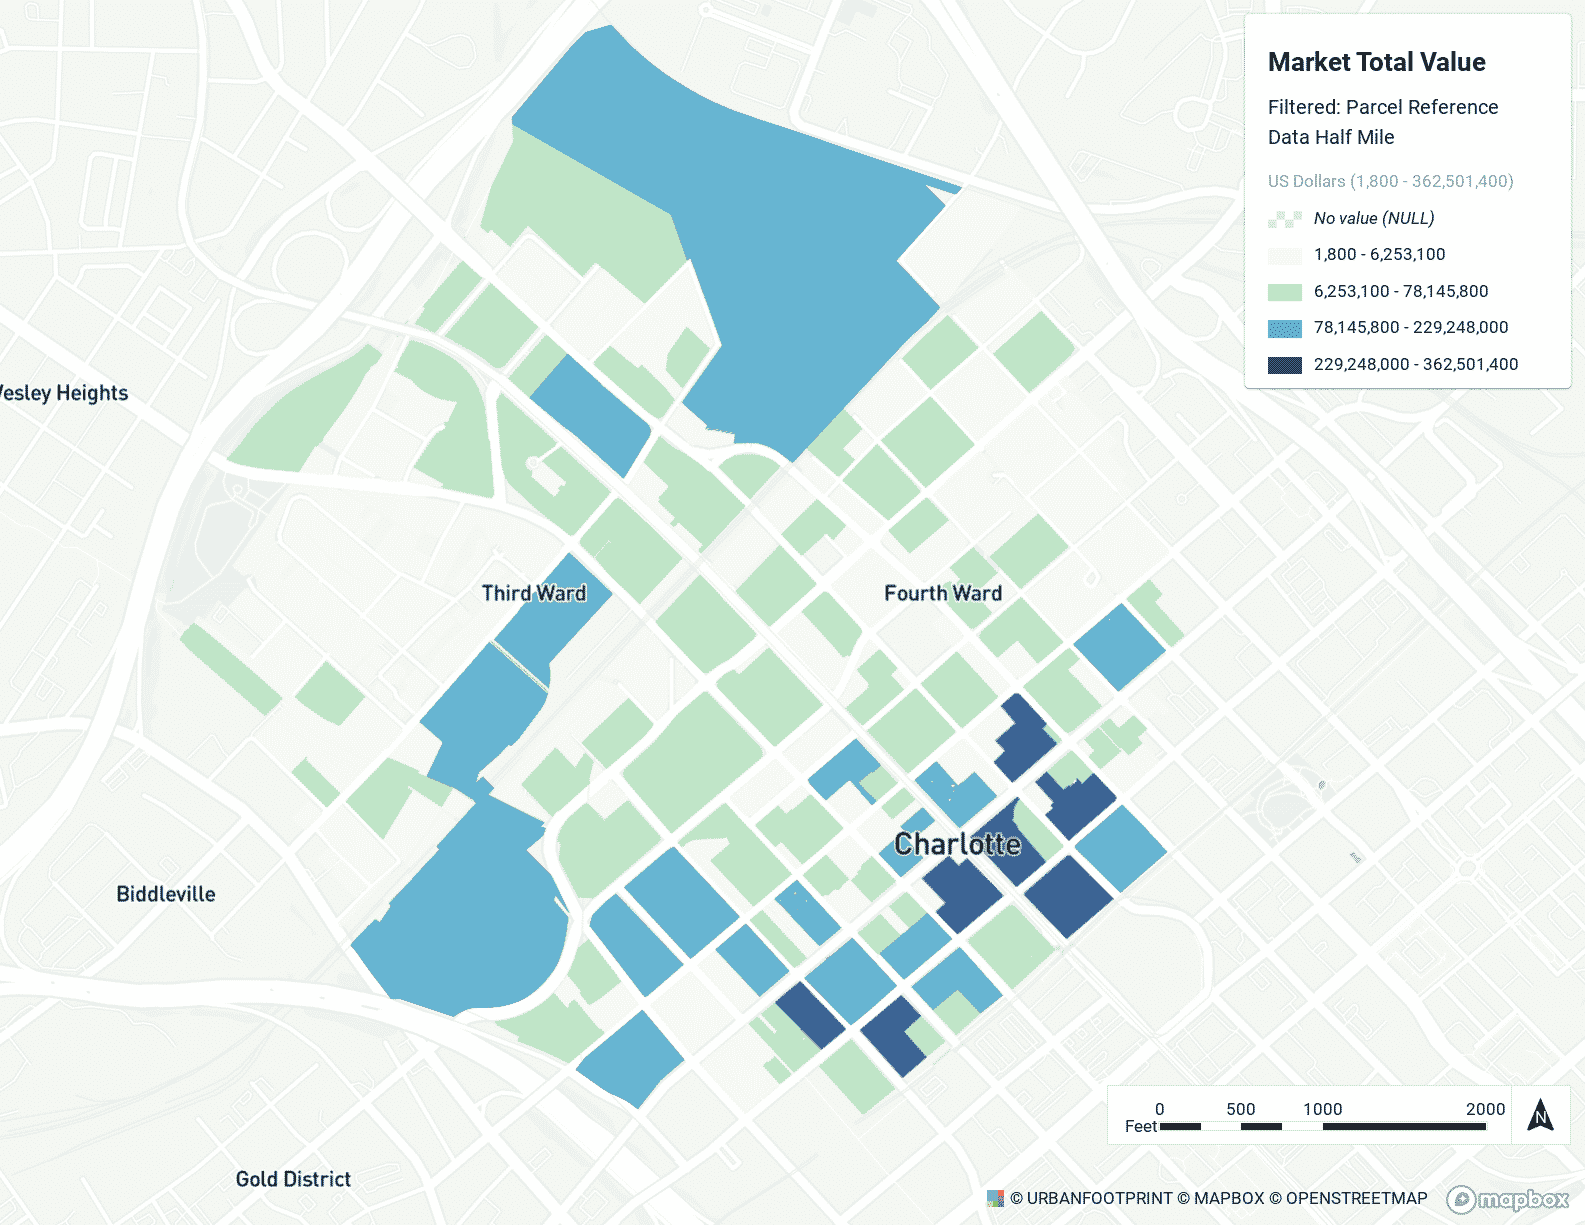 Parcel-level data from UrbanFootprint